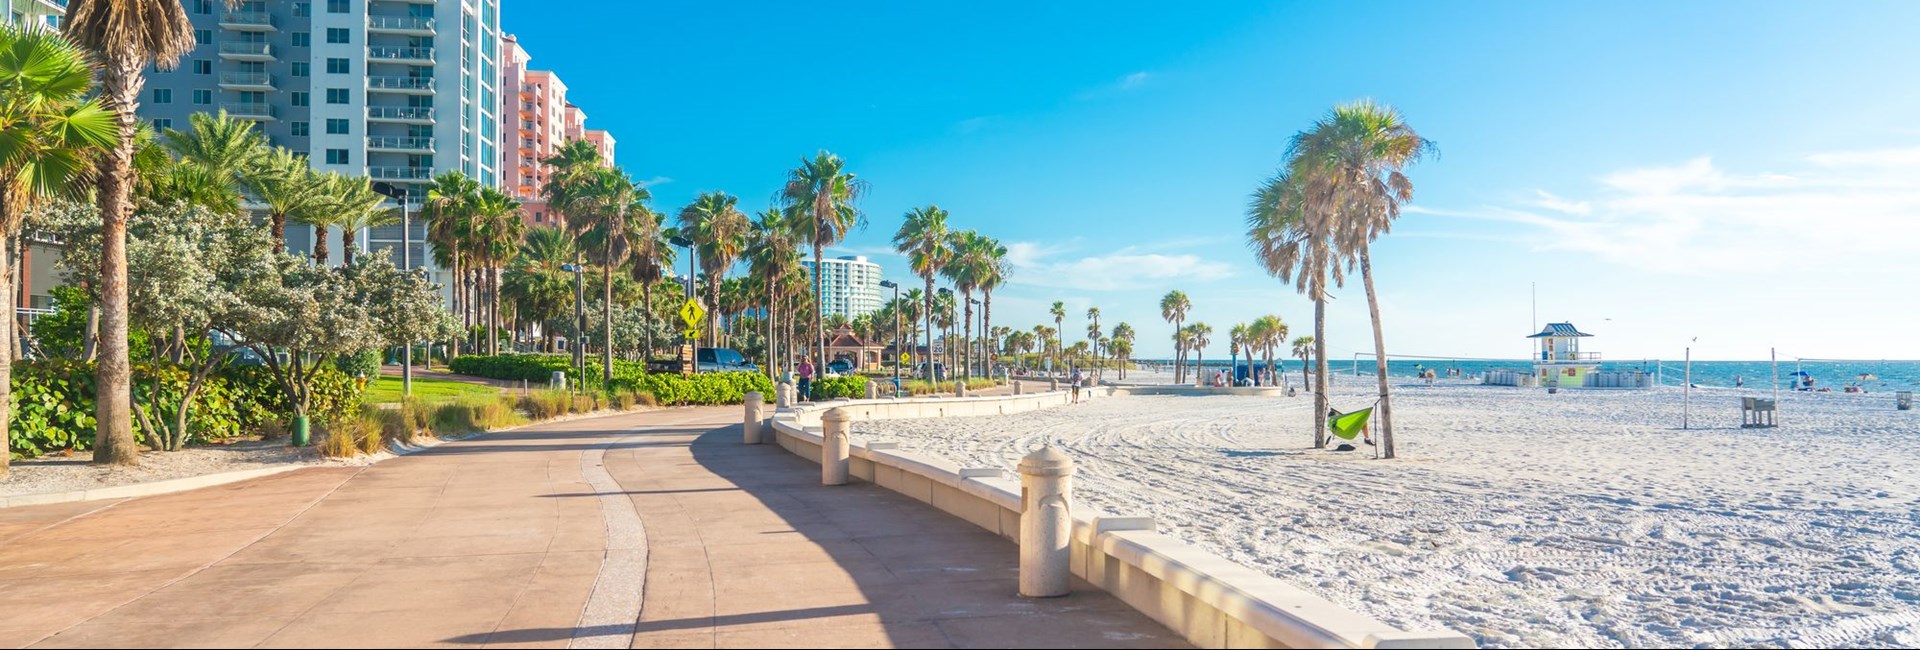 Promenade next to a beautiful white sand beach in Florida 